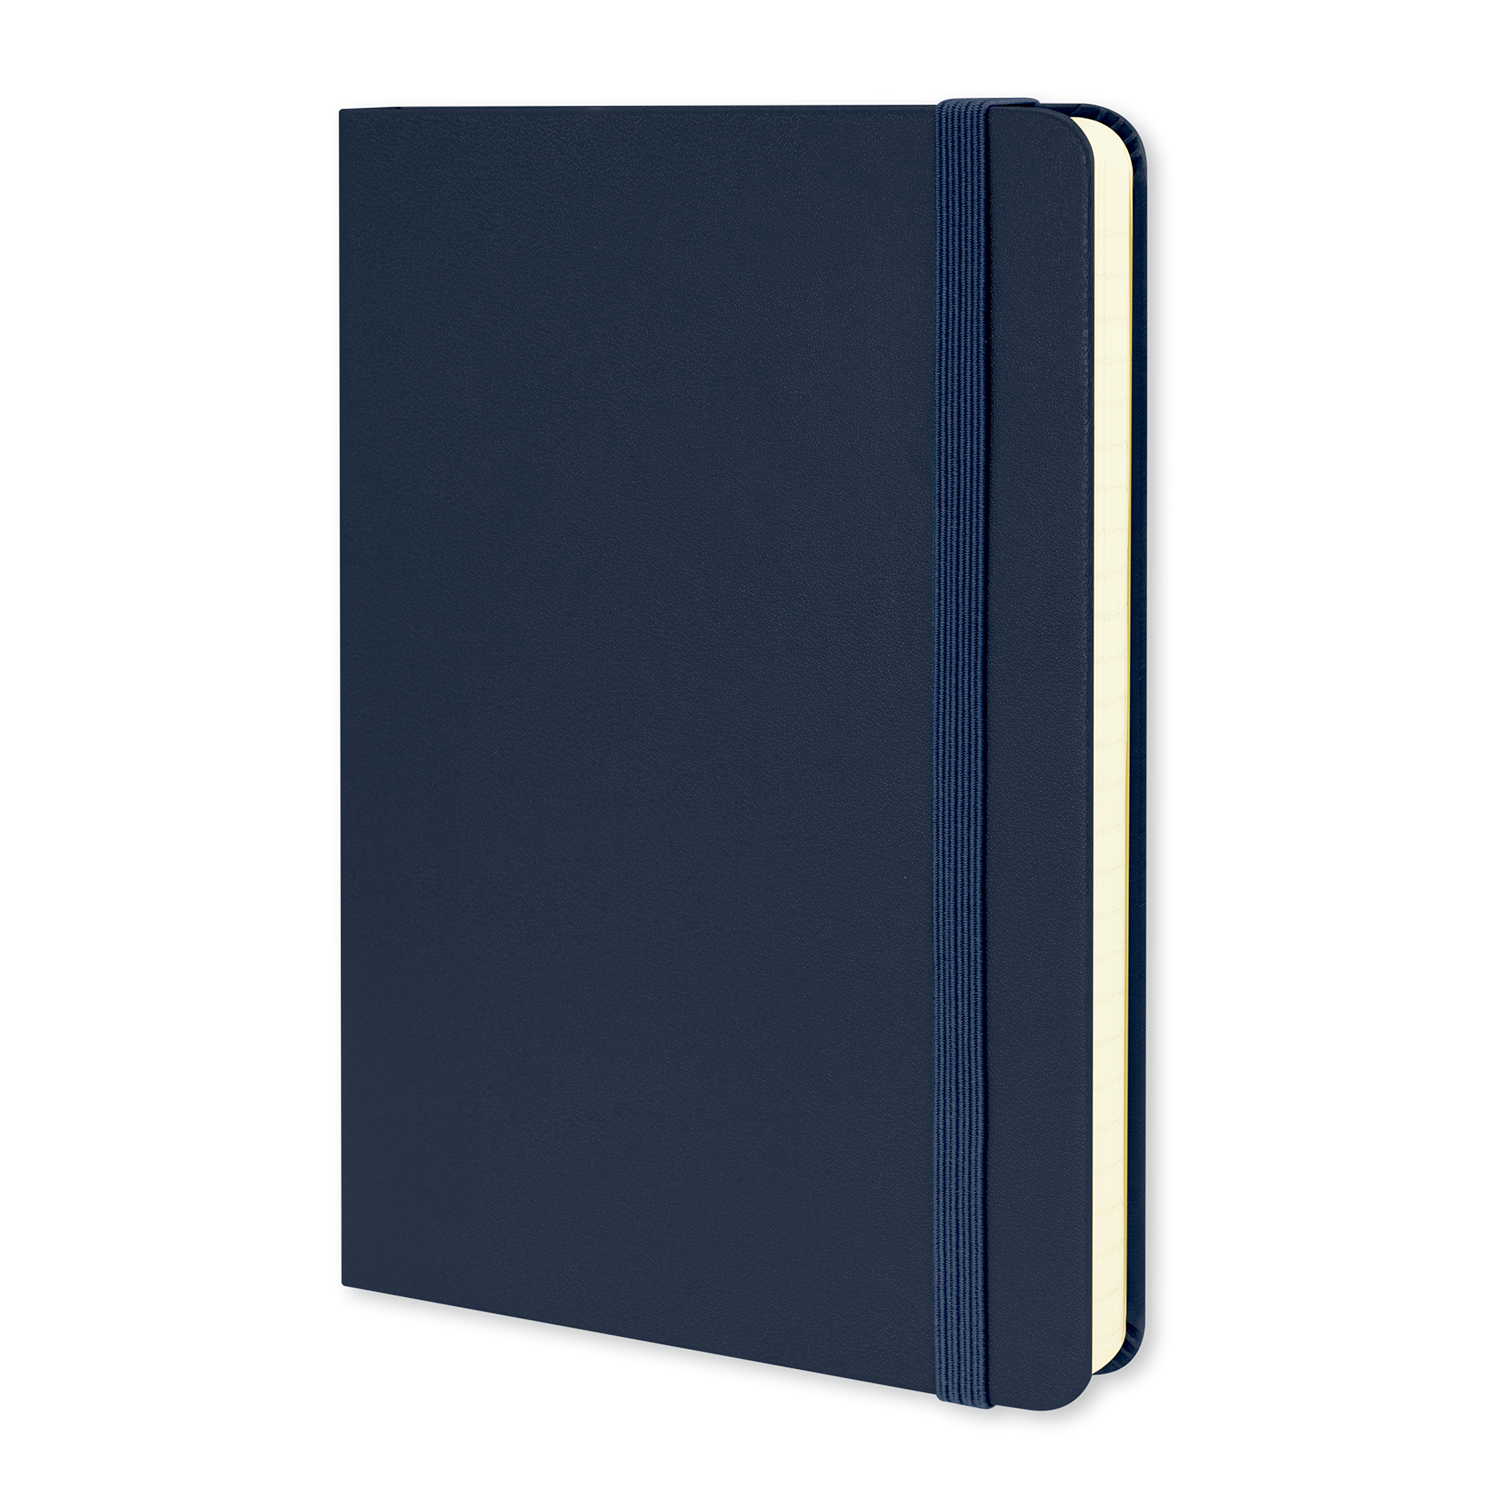 TRENDS  Moleskine Classic Hard Cover Notebook - Medium